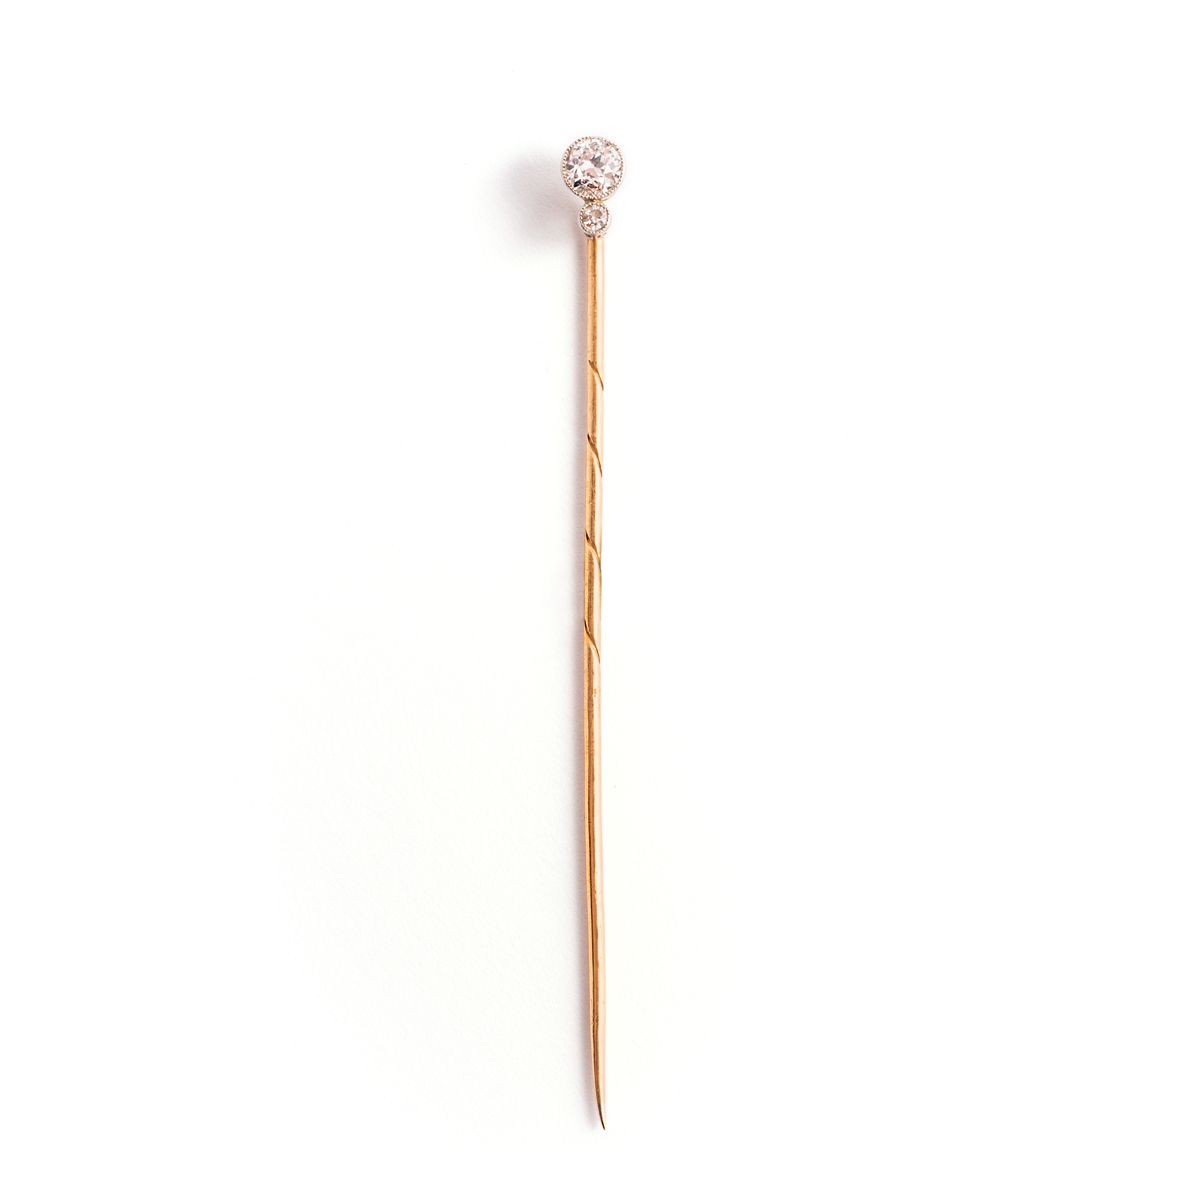 Null 18K黄金和铂金胸针，镶嵌一颗钻石（约0.35克拉

20世纪初

长度：70毫米

毛重：2.40克